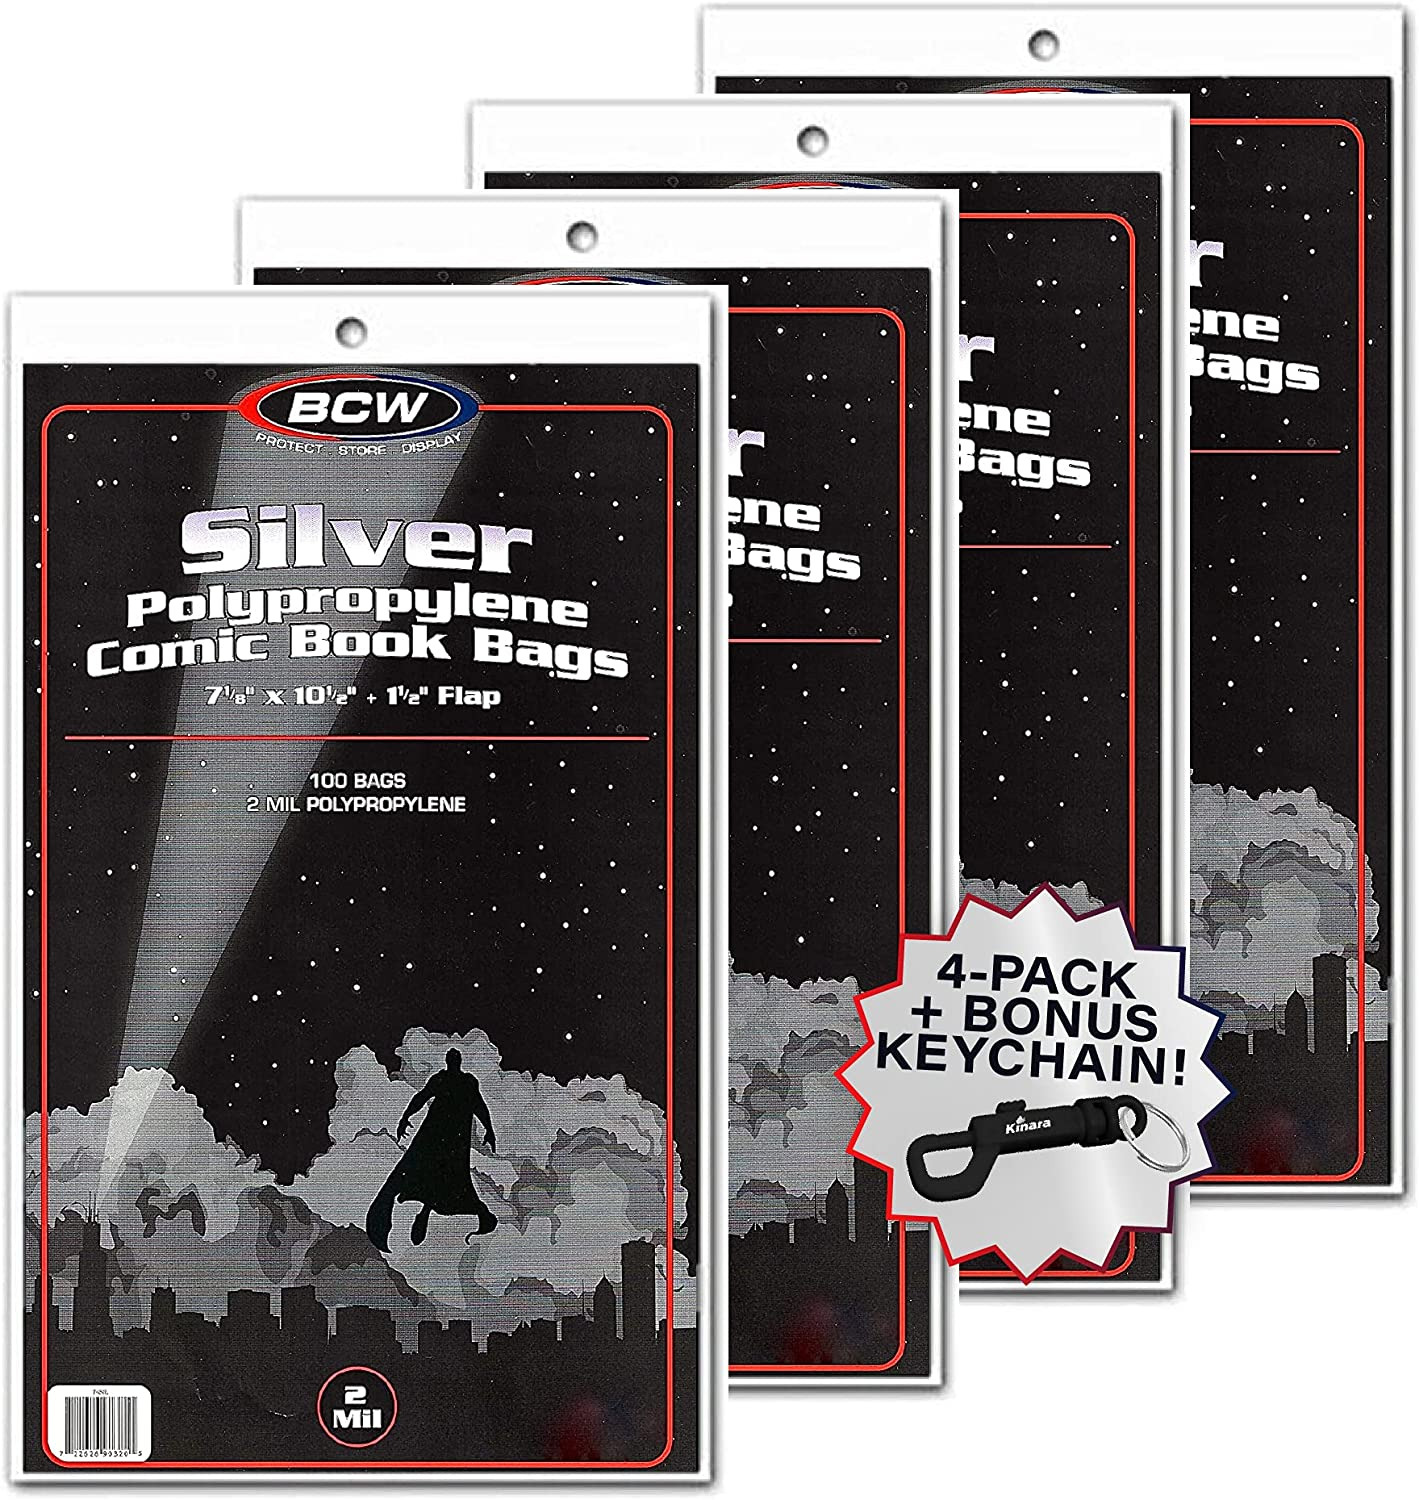 BCW Comic Bags 4-Pack, Silver 7 18 X10 12 + 1 12 Flap 2 Mil Polypropylene (400 C